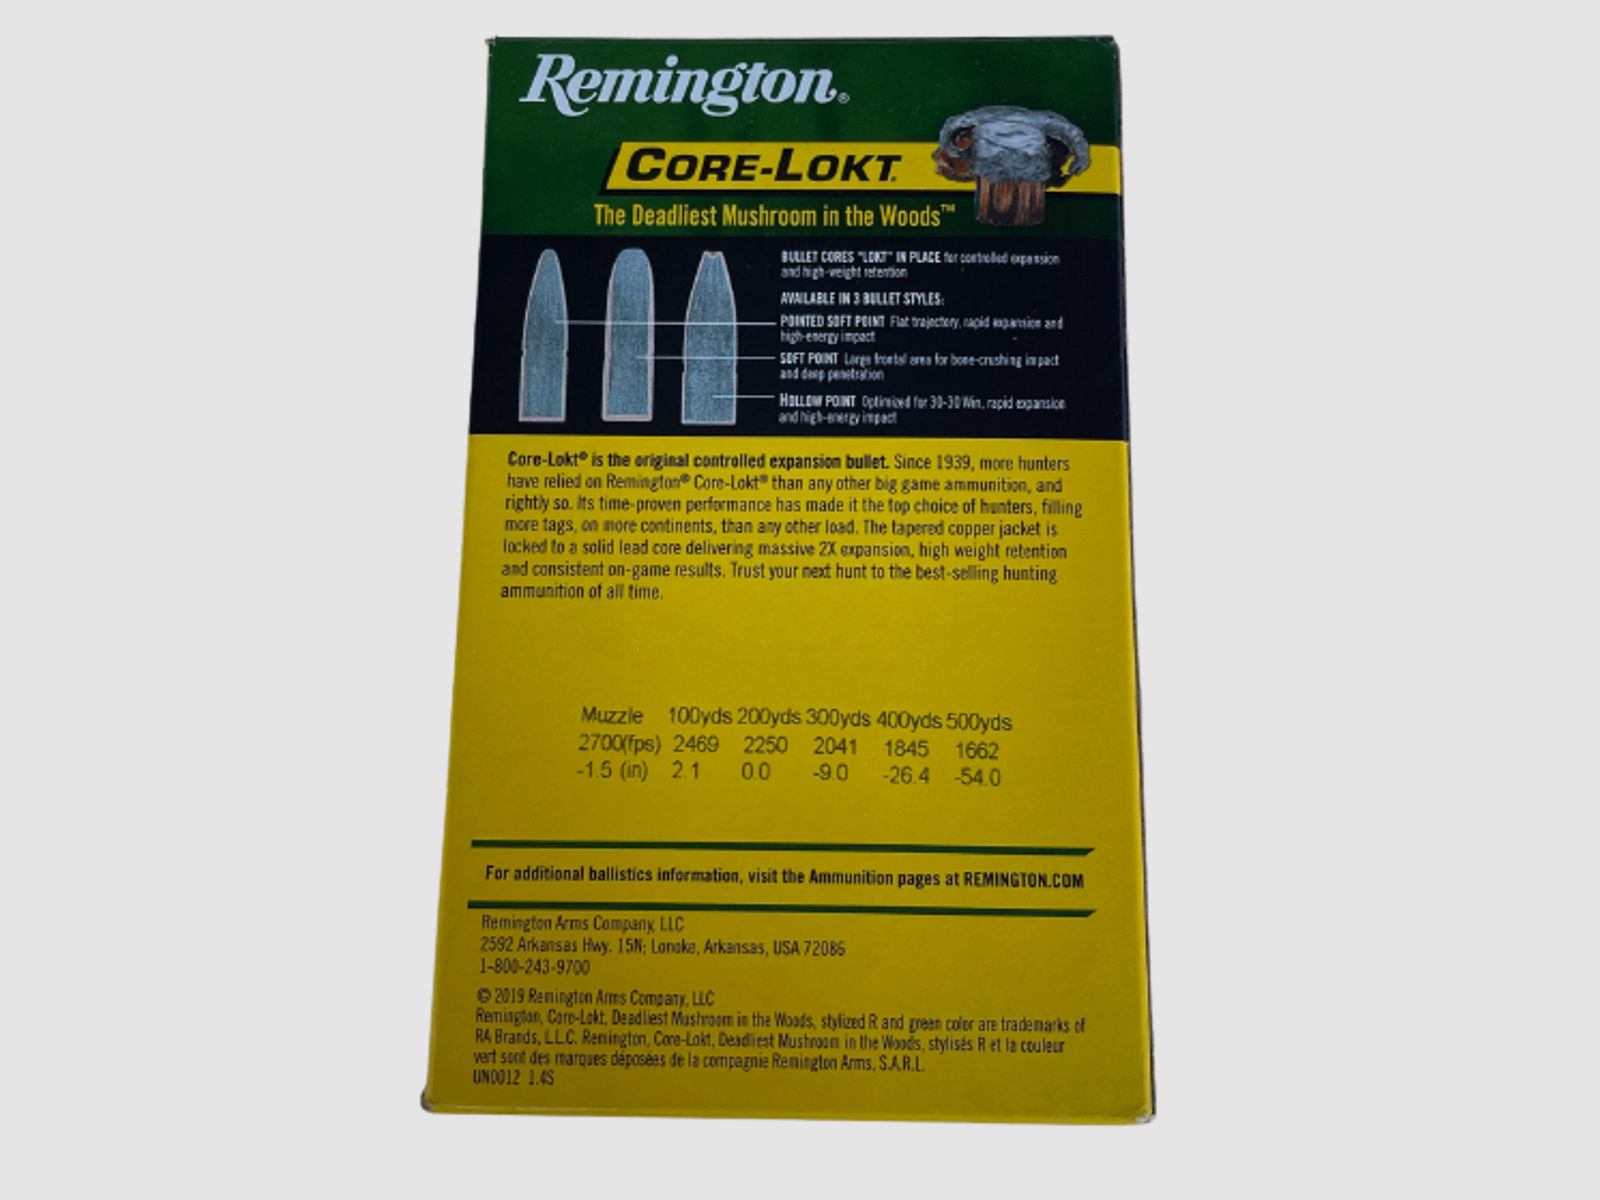 Remington Core-Lokt PSP 30.06 SPRG